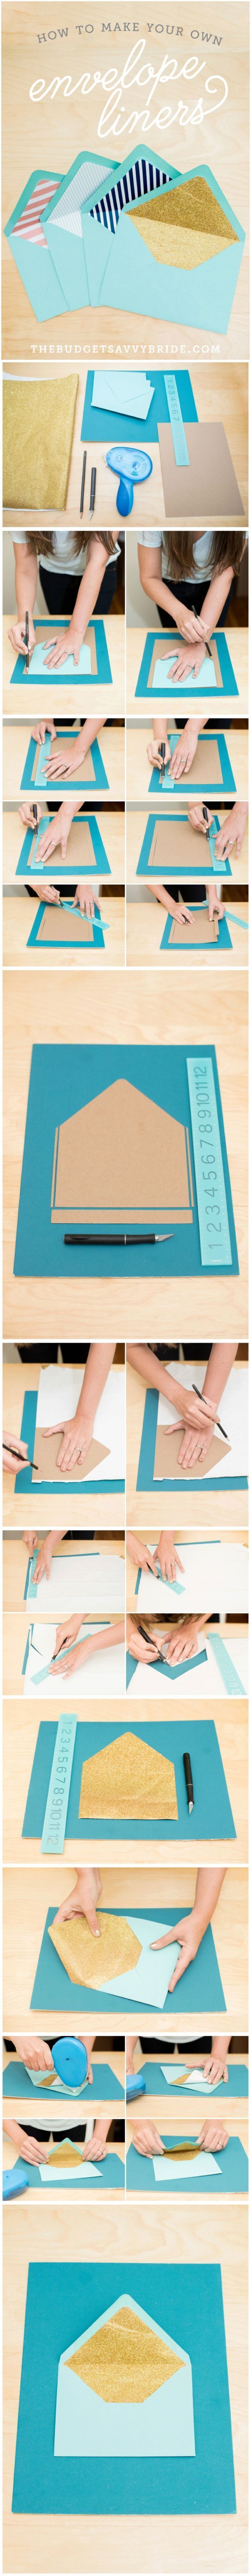 Line ’em up, send ’em out! #DIY envelope liners make any correspondence special.